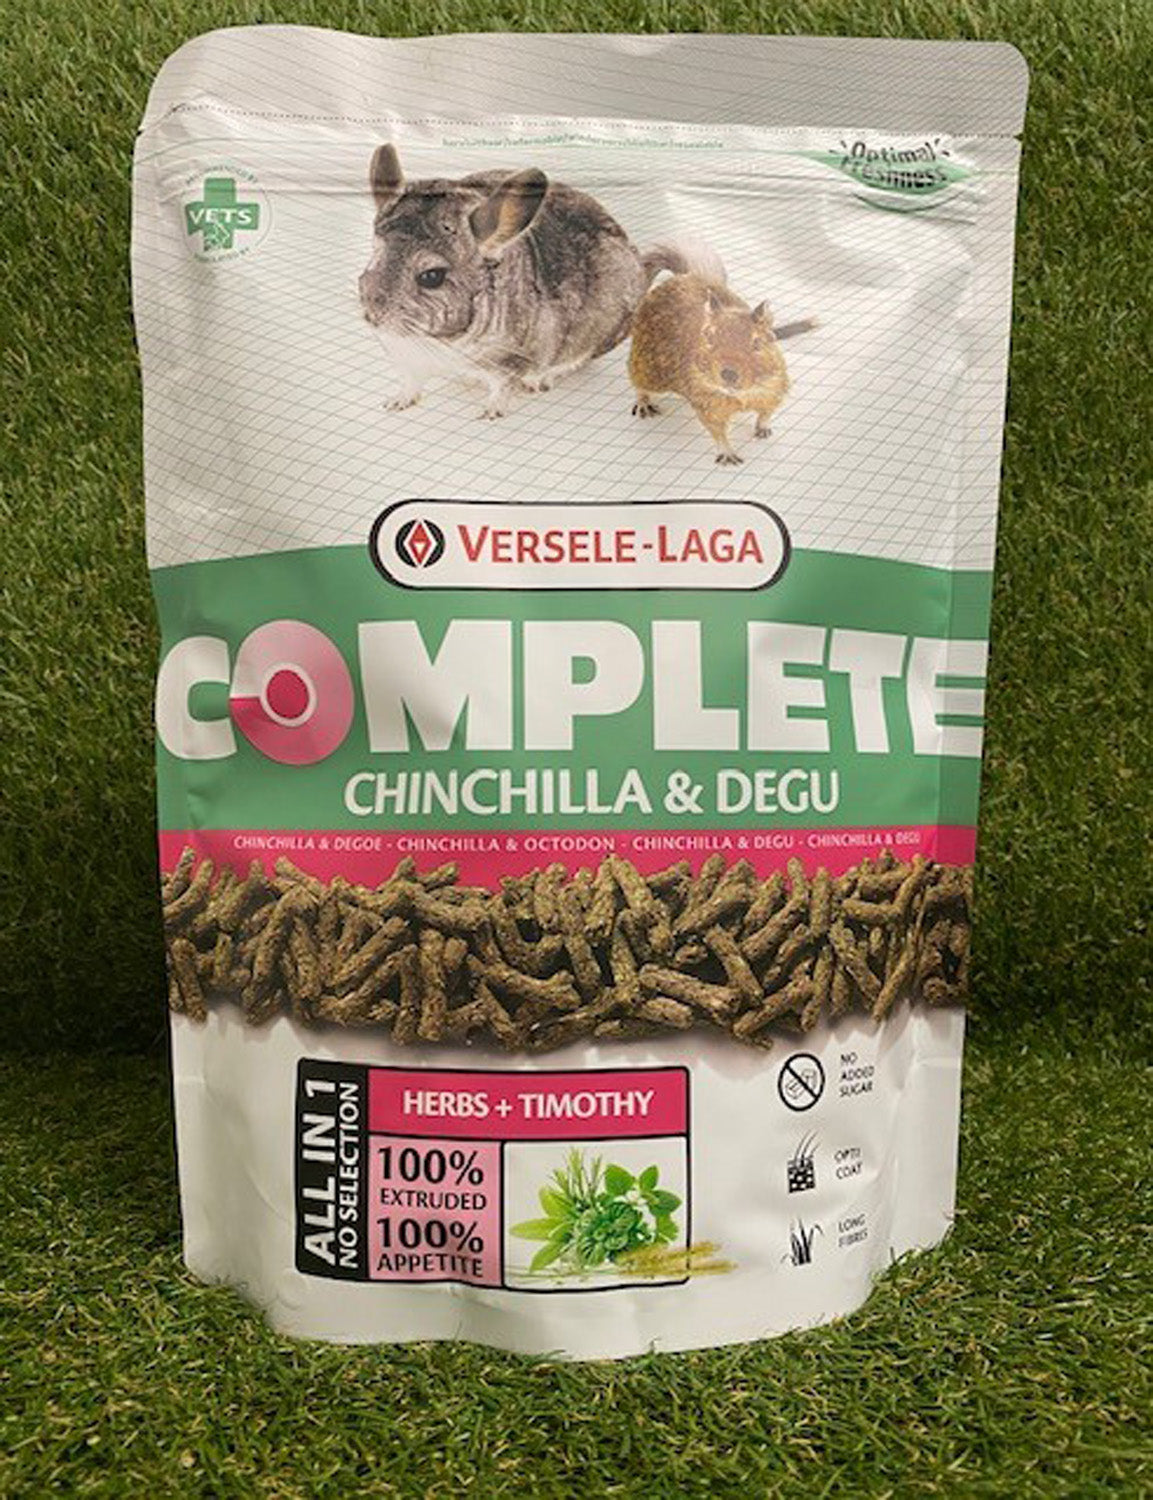 Versele-Laga Complete Chinchilla & Degu Food - 3 lb